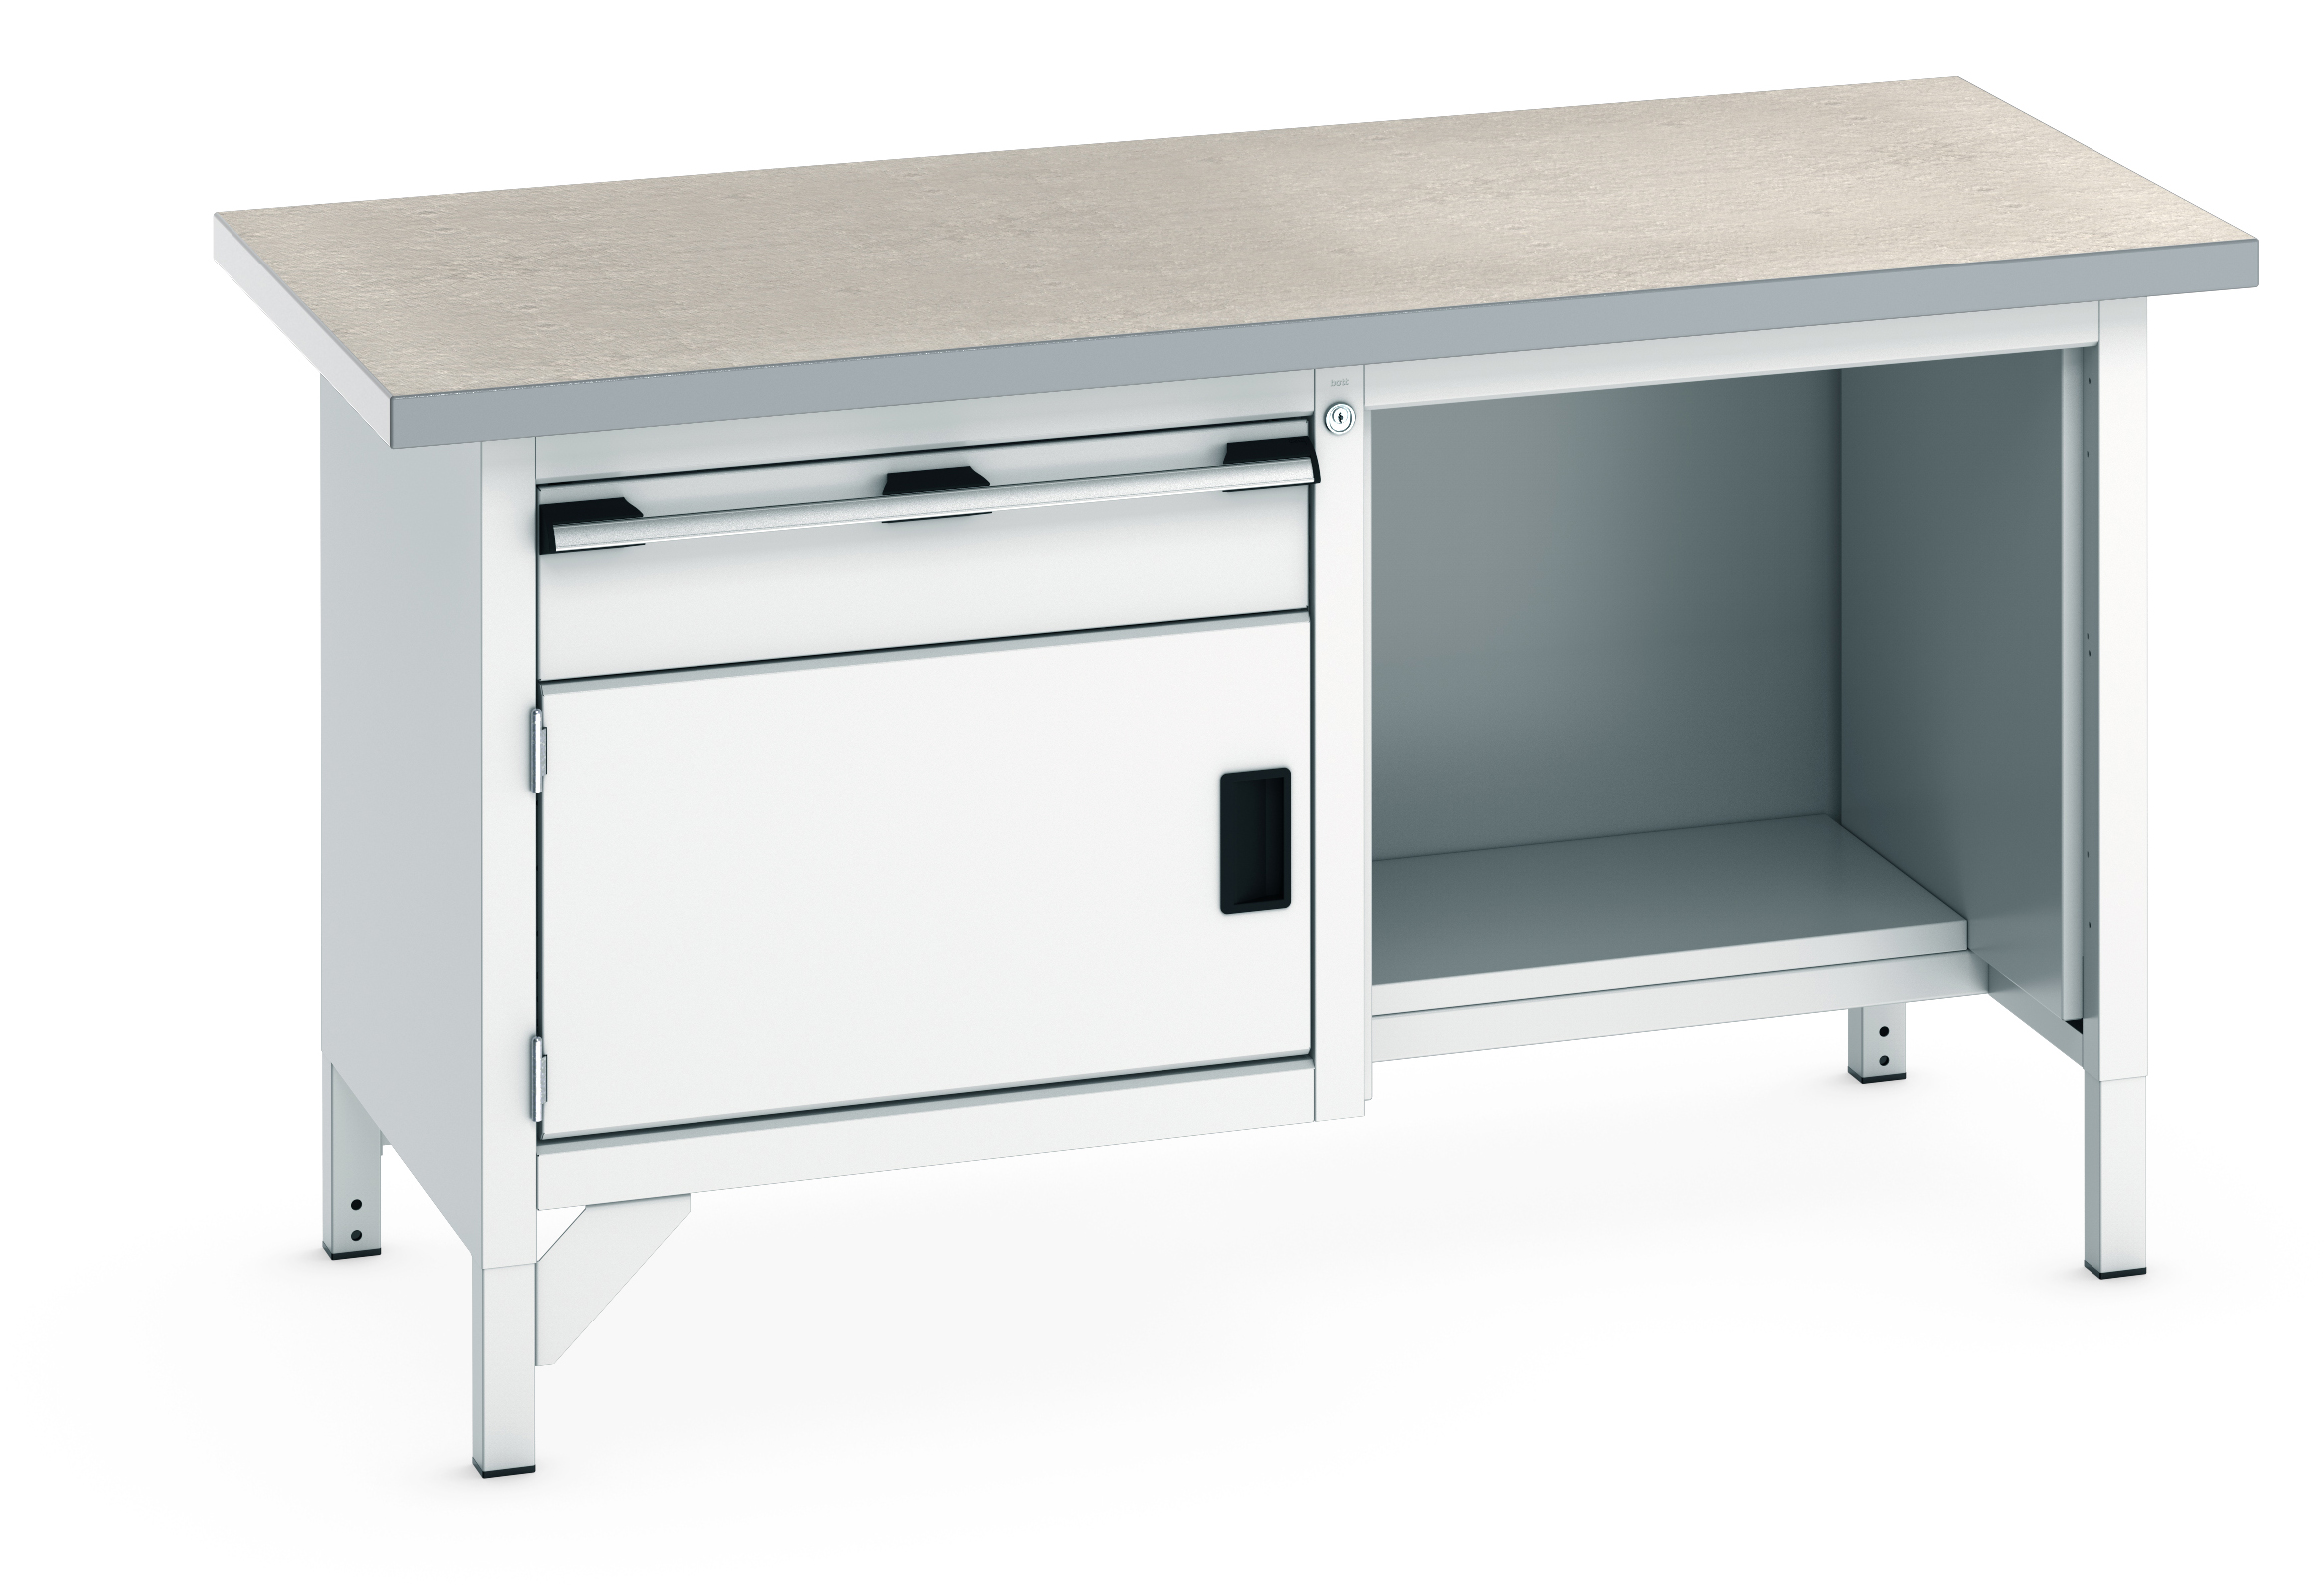 Bott Cubio Storage Bench With 1 Drawer-Door Cabinet / Open With Half Depth Base Shelf - 41002039.16V